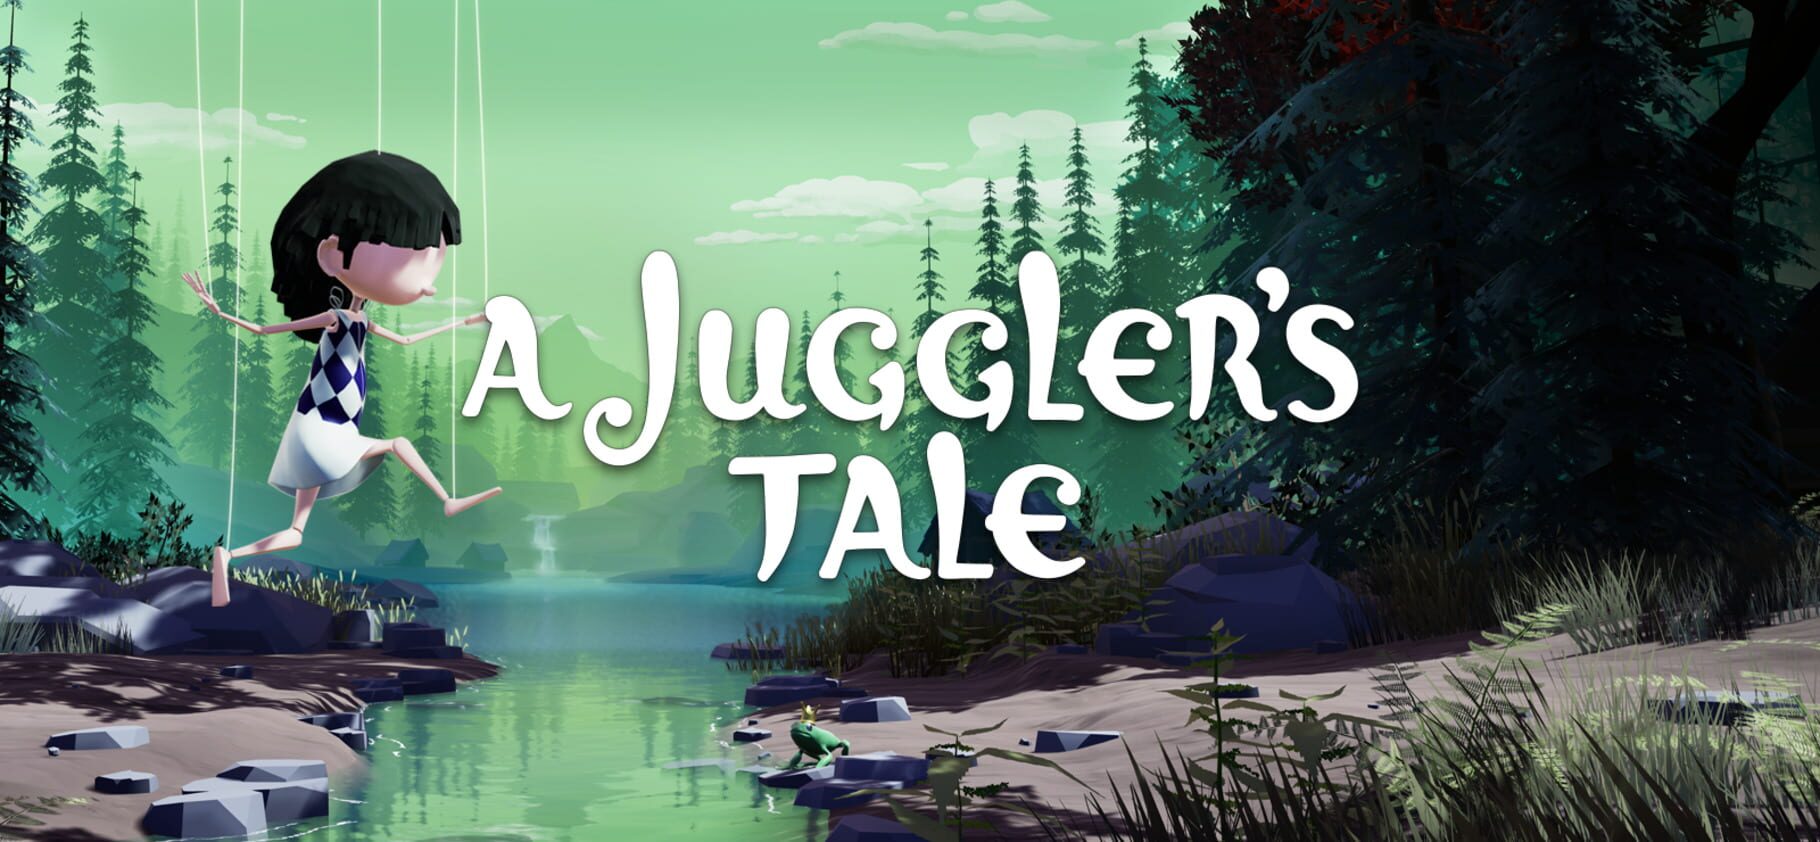 A Juggler's Tale artwork